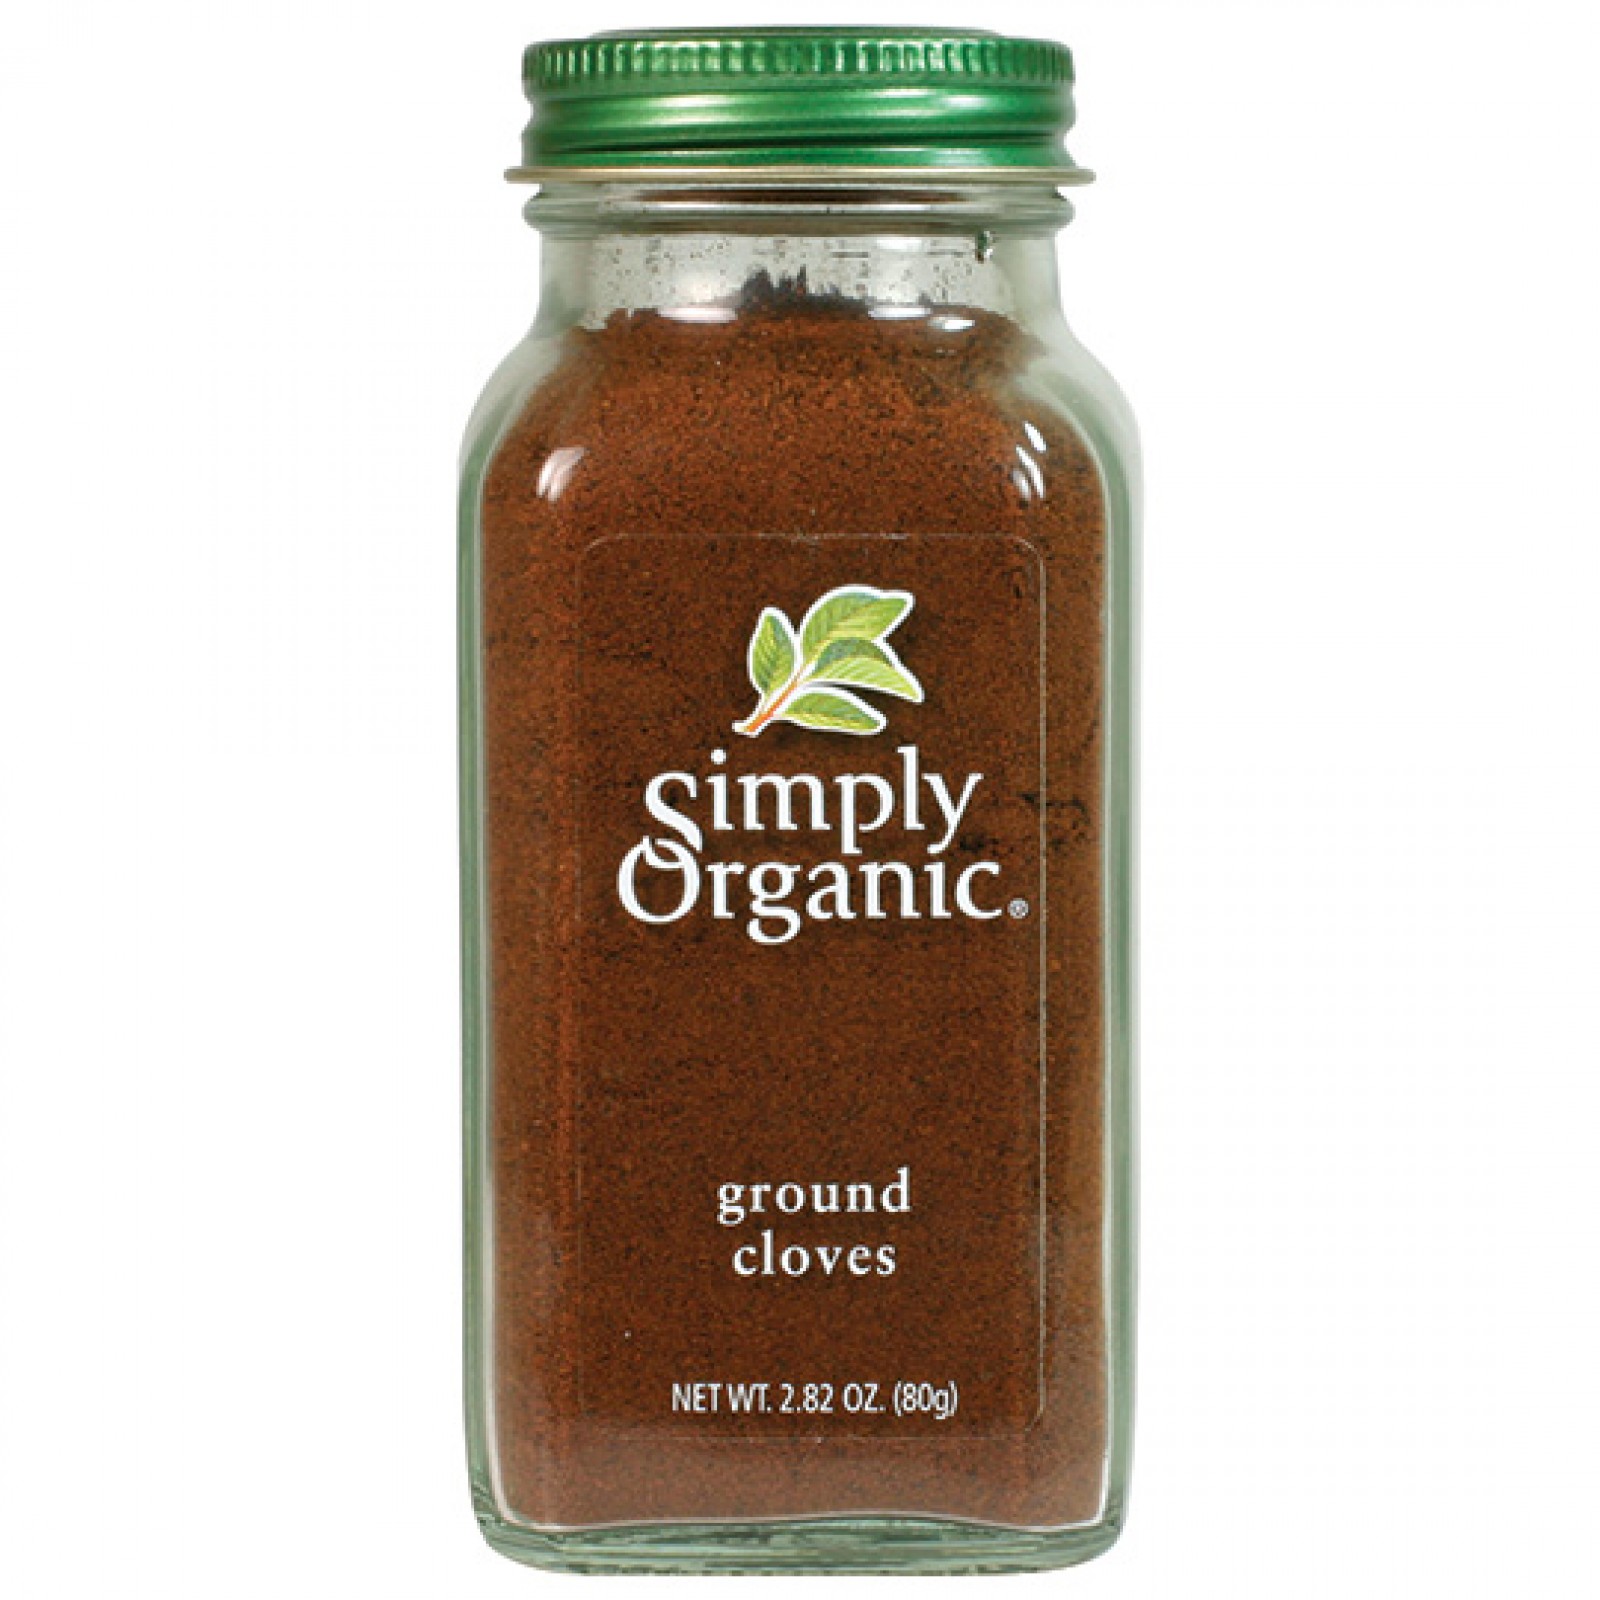 Simply Organic Cloves Ground 2.82 oz. - Simply Organic